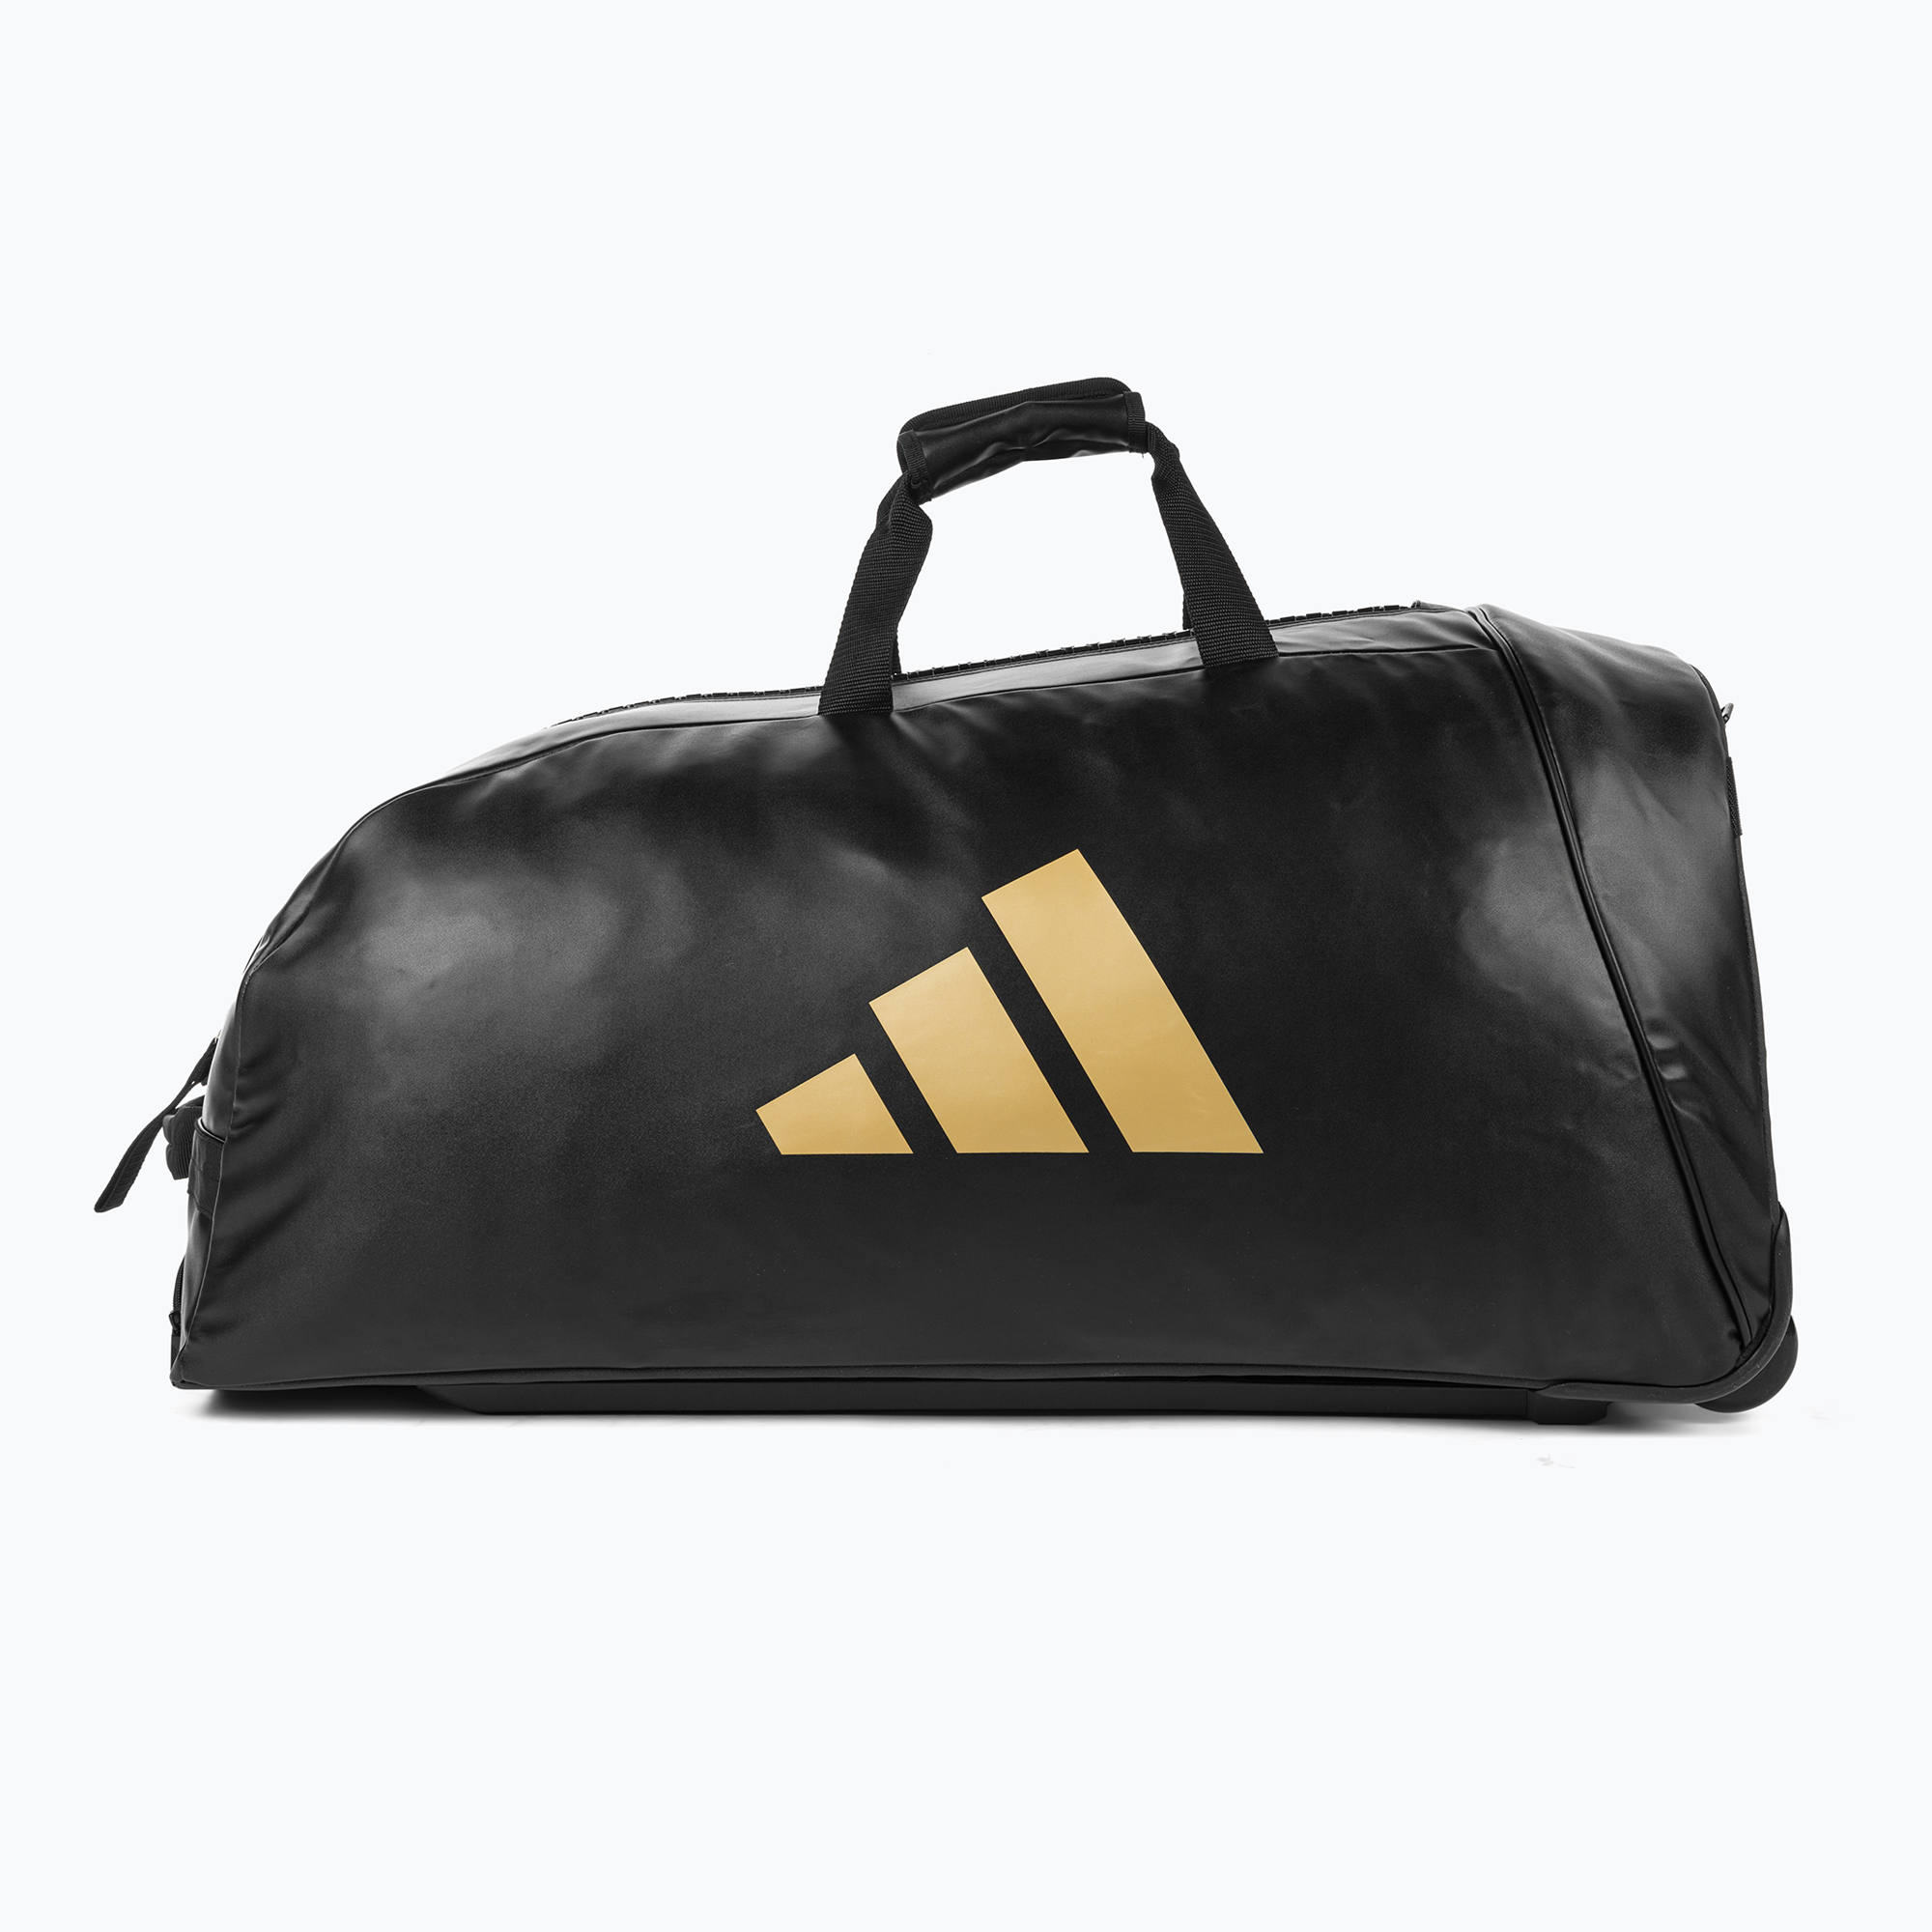 Фото - Інші сумки й аксесуари Adidas Torba podróżna  120 l black/gold | WYSYŁKA W 24H | 30 DNI NA ZWROT 